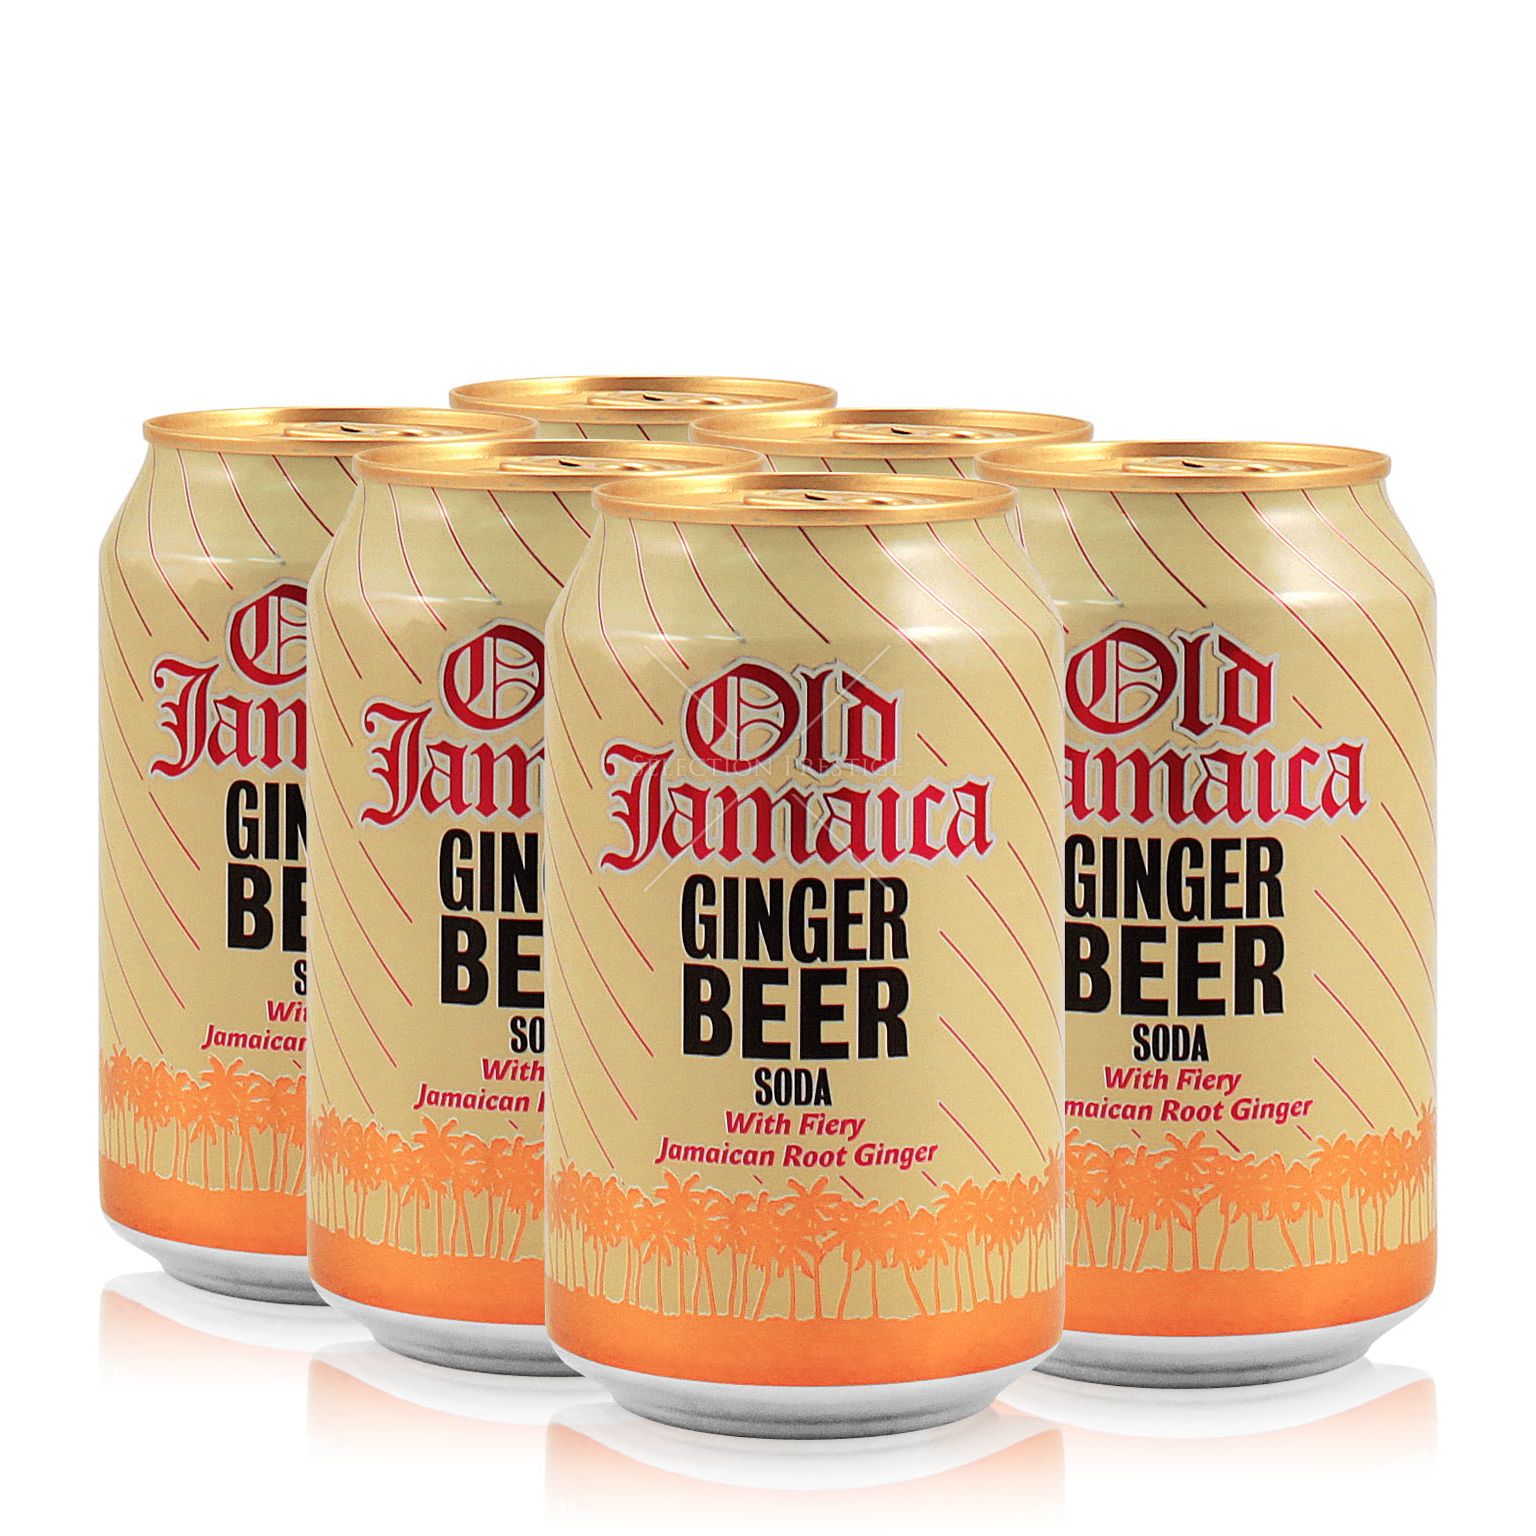 bvi>Old Jamaica Ginger Beer - 12 oz cans, 6 pack